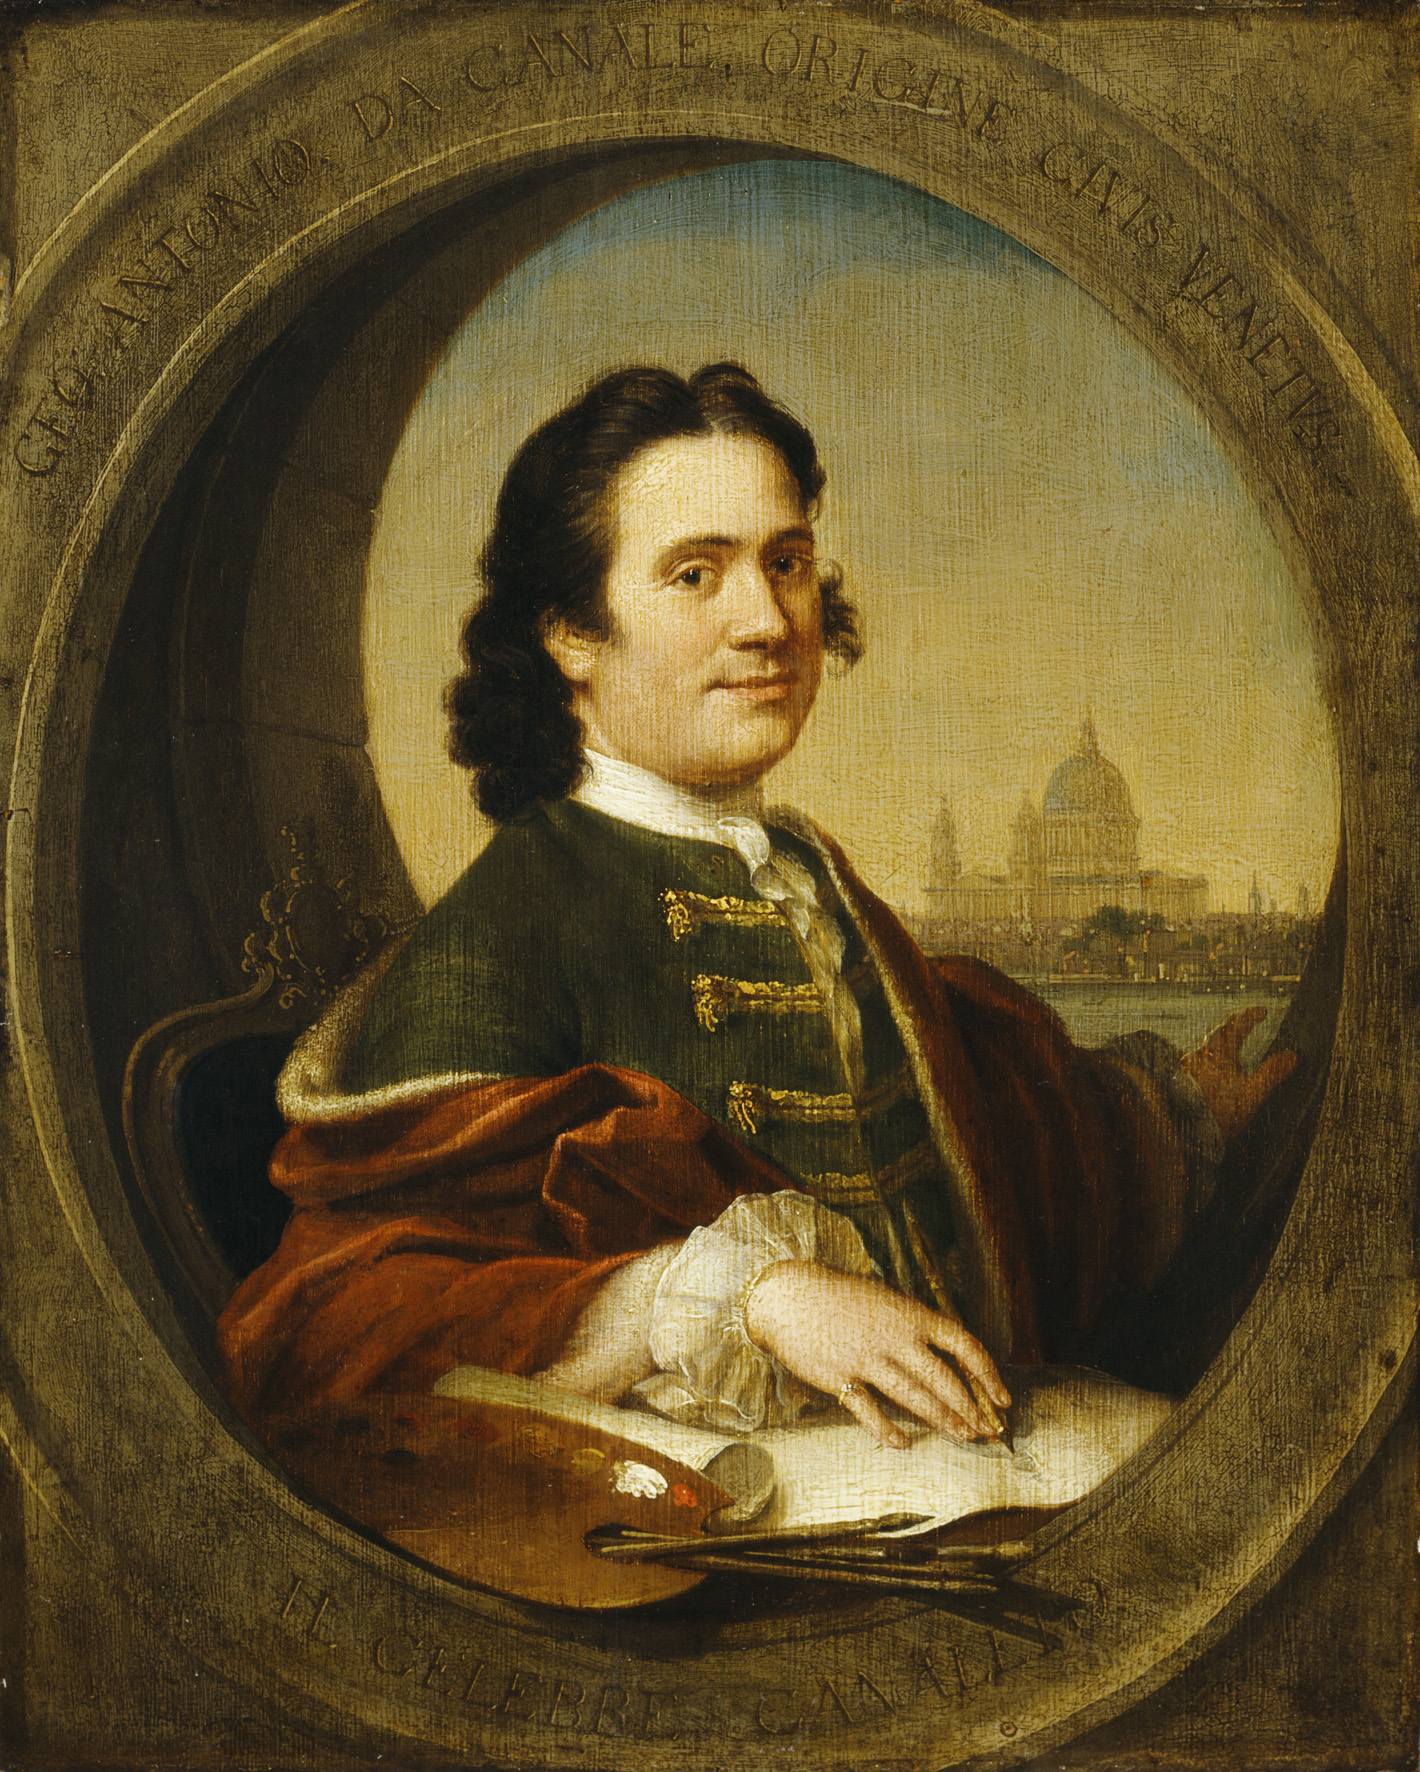 Giovanni Antonio Canal (Canaletto) - October 18, 1697 - April 19, 1768